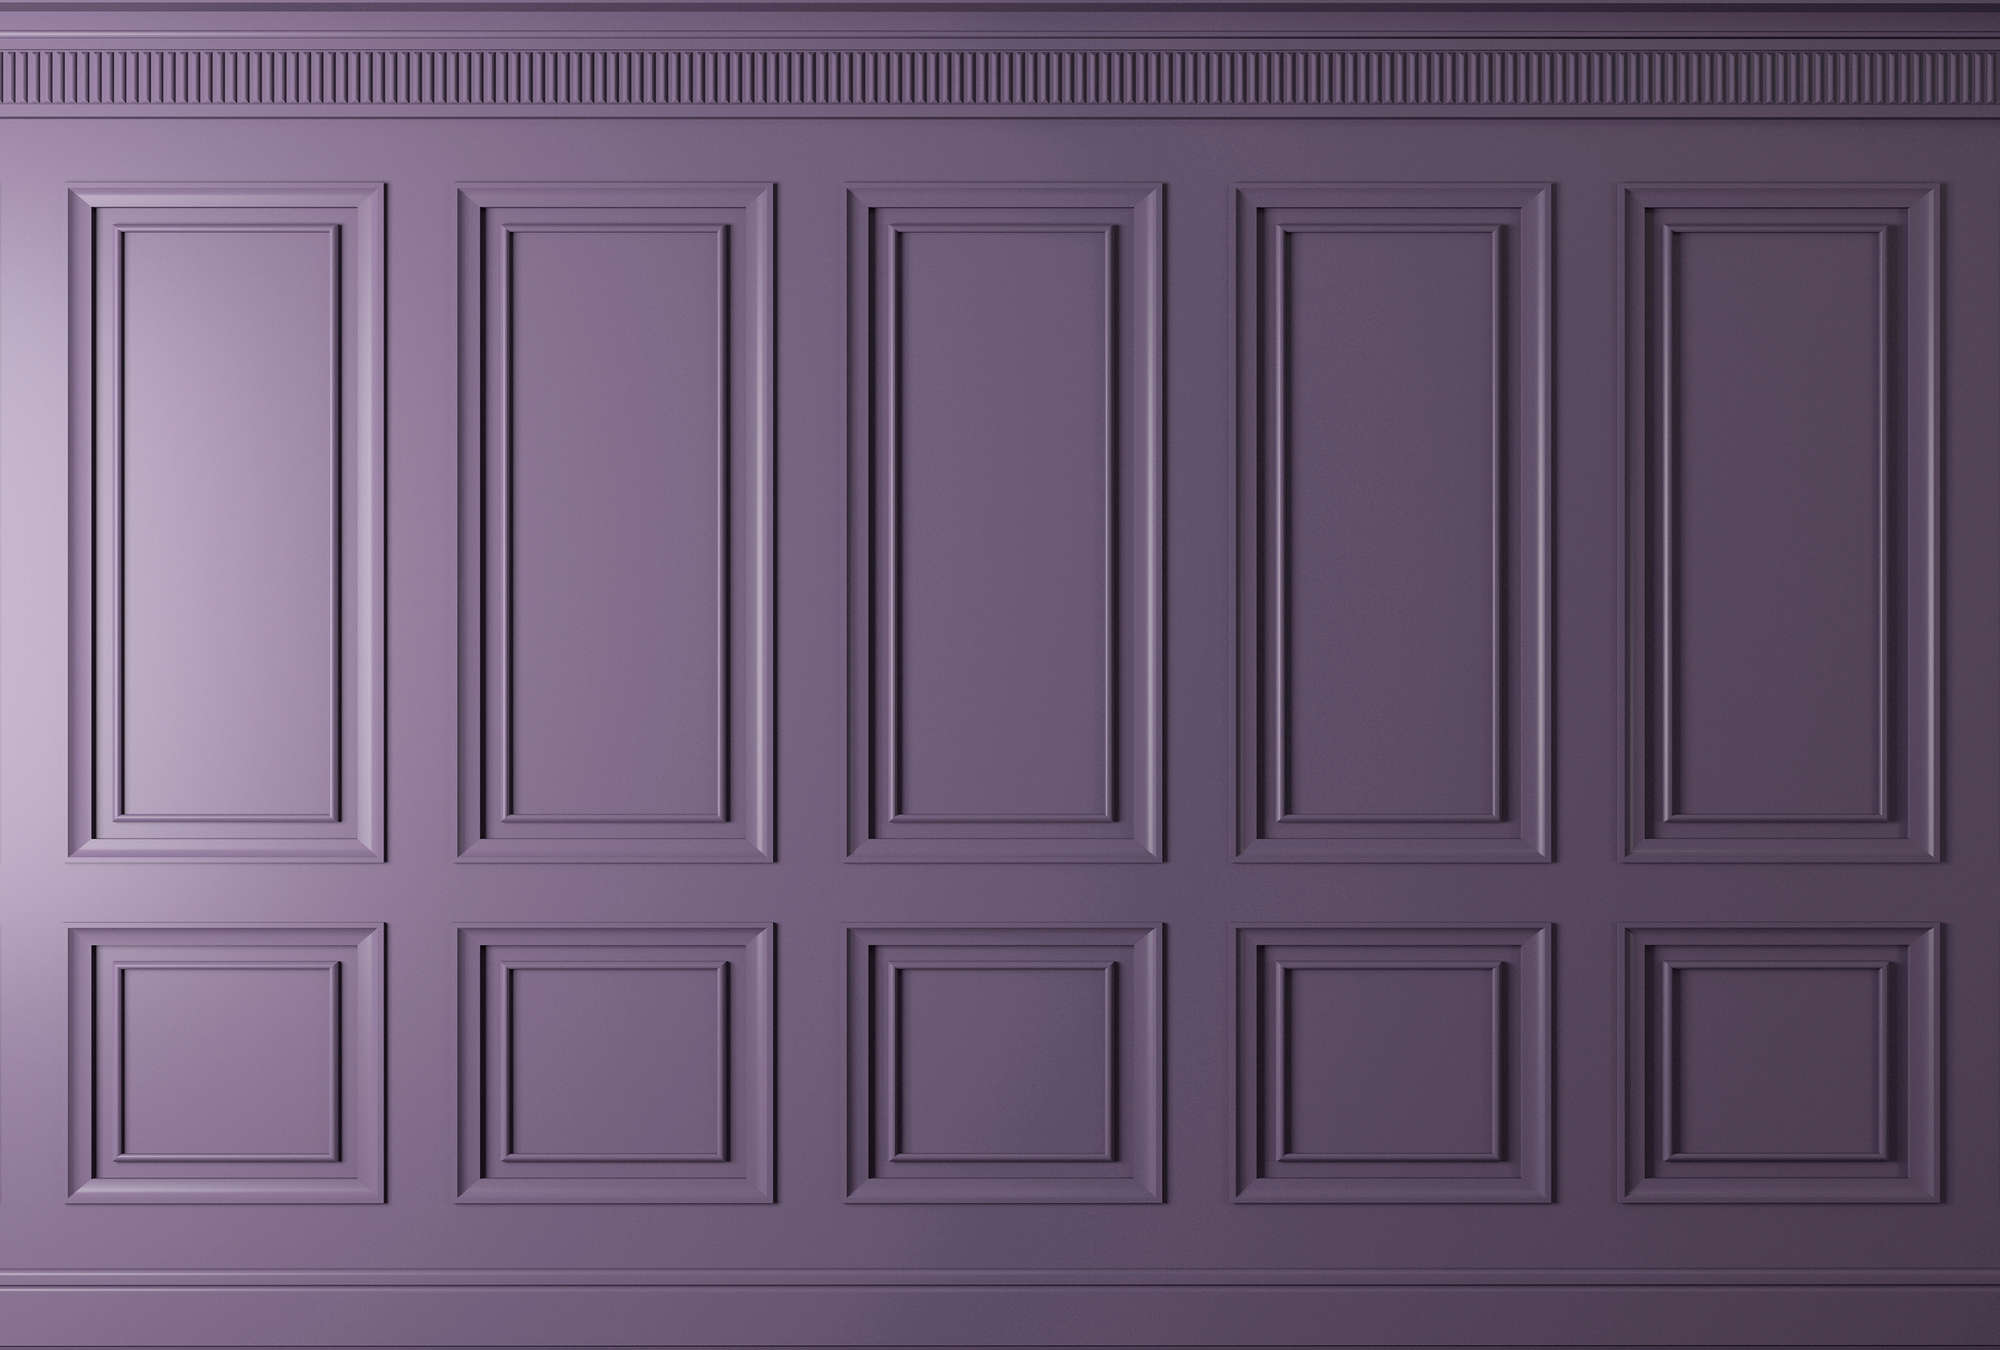             Kensington 3 - Papel pintado fotográfico 3D para paneles de madera, morado oscuro, Violeta
        